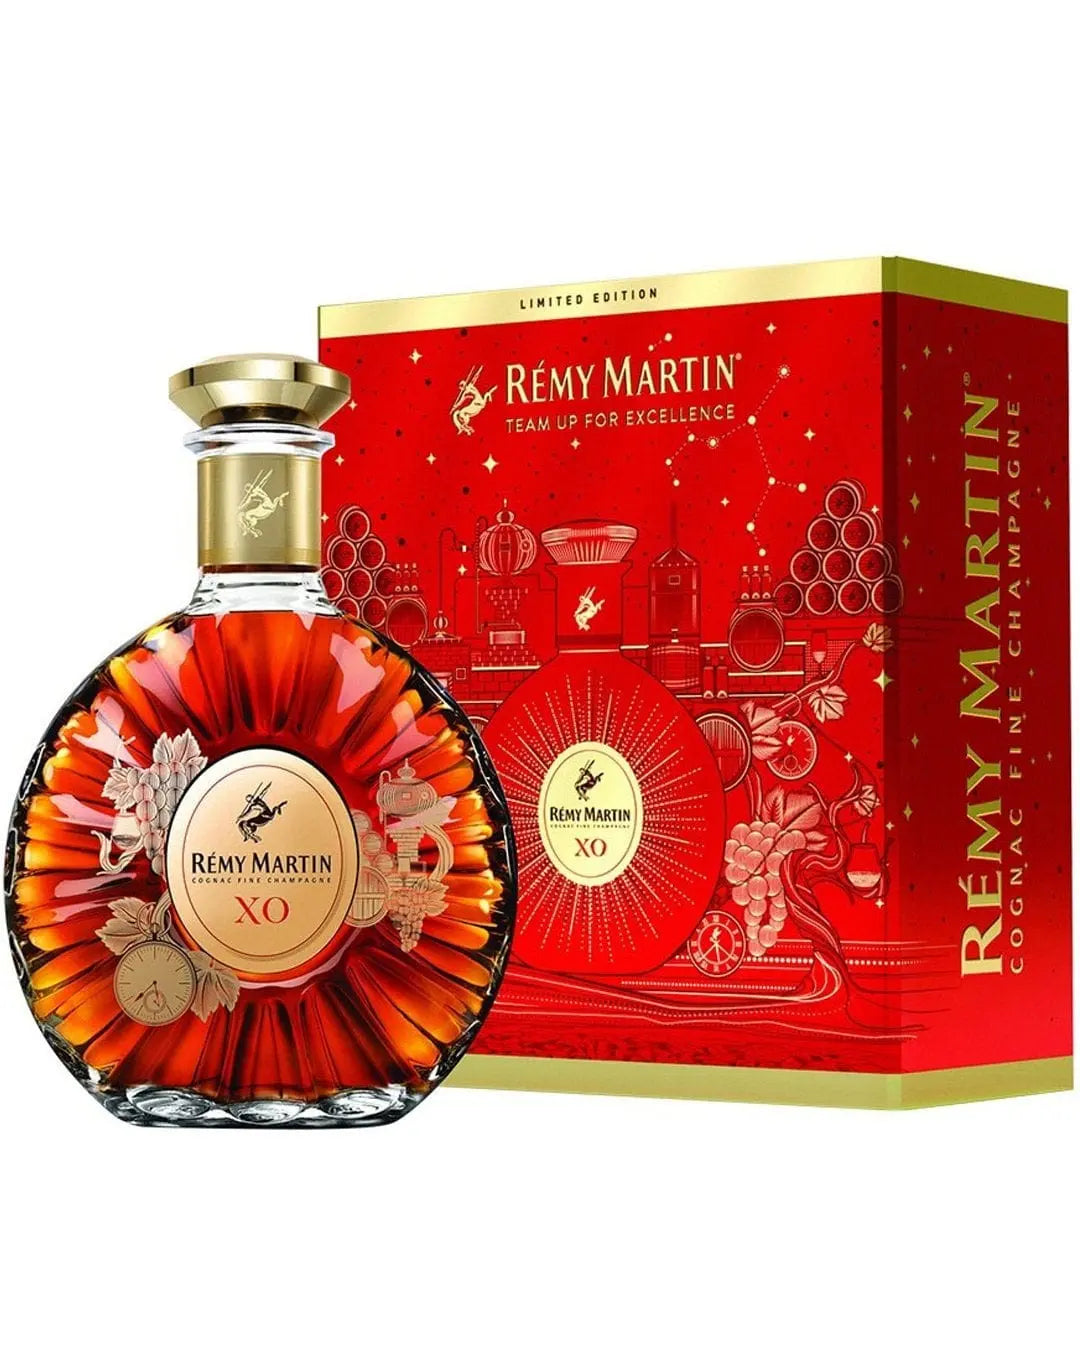 Remy Martin XO Limited Edition "Festival de Cannes" Gift Box, 70 cl Cognac & Brandy 3024480012541